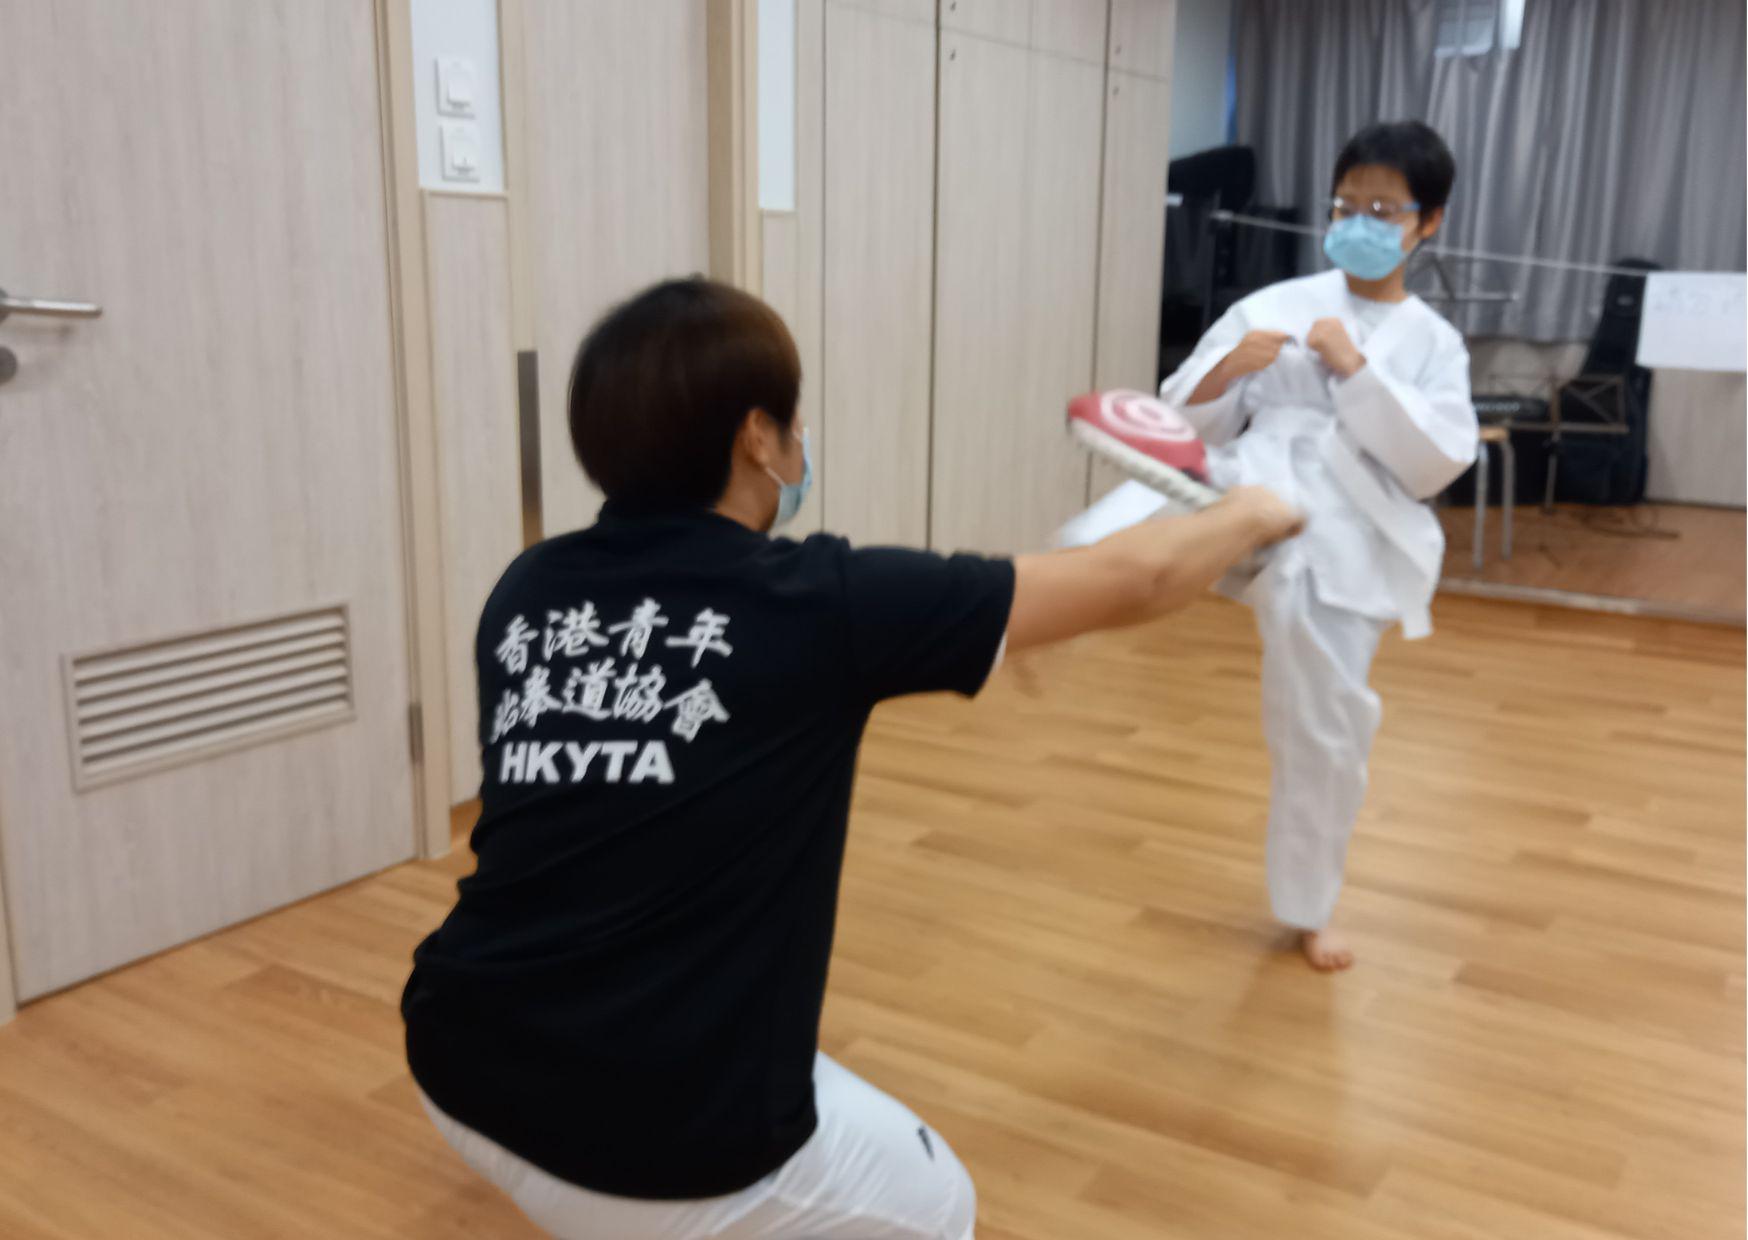 Sports and Physical Lesson: Taekwondo